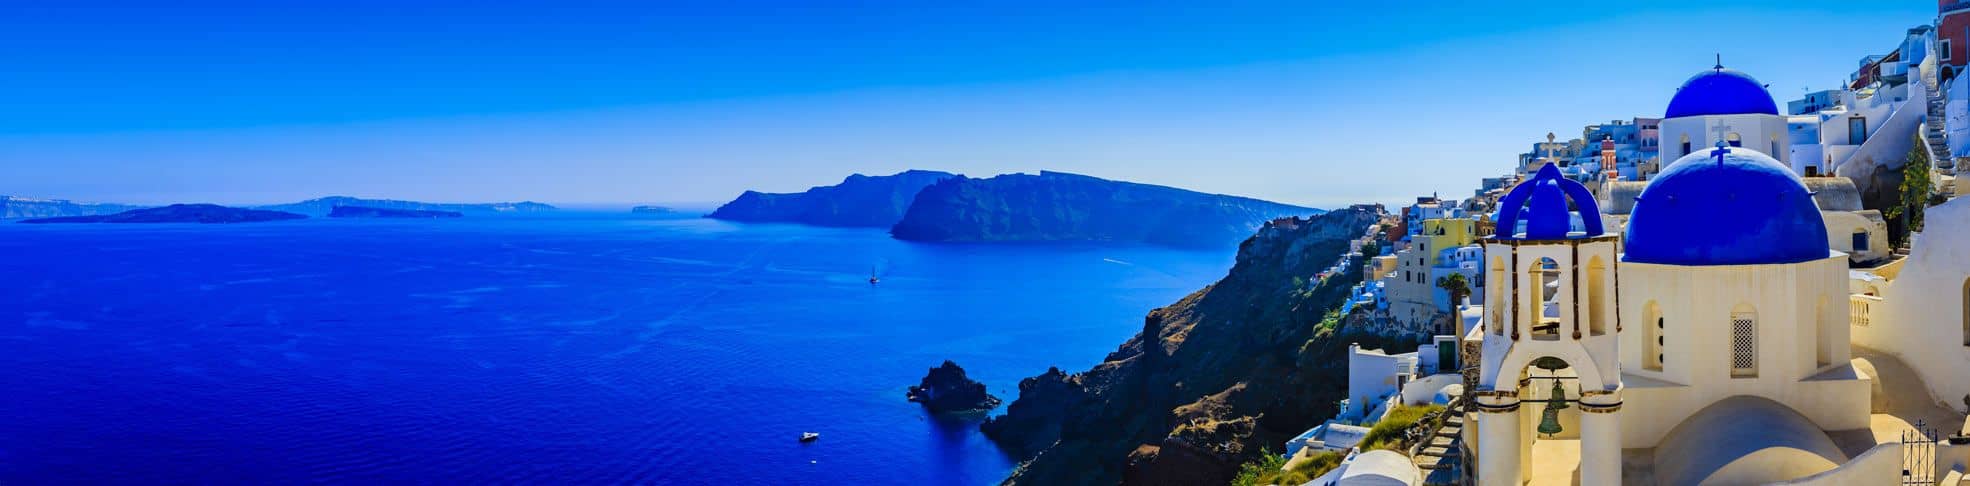 Santorini Holidays 2017/2018 – Greece | Teletext Holidays